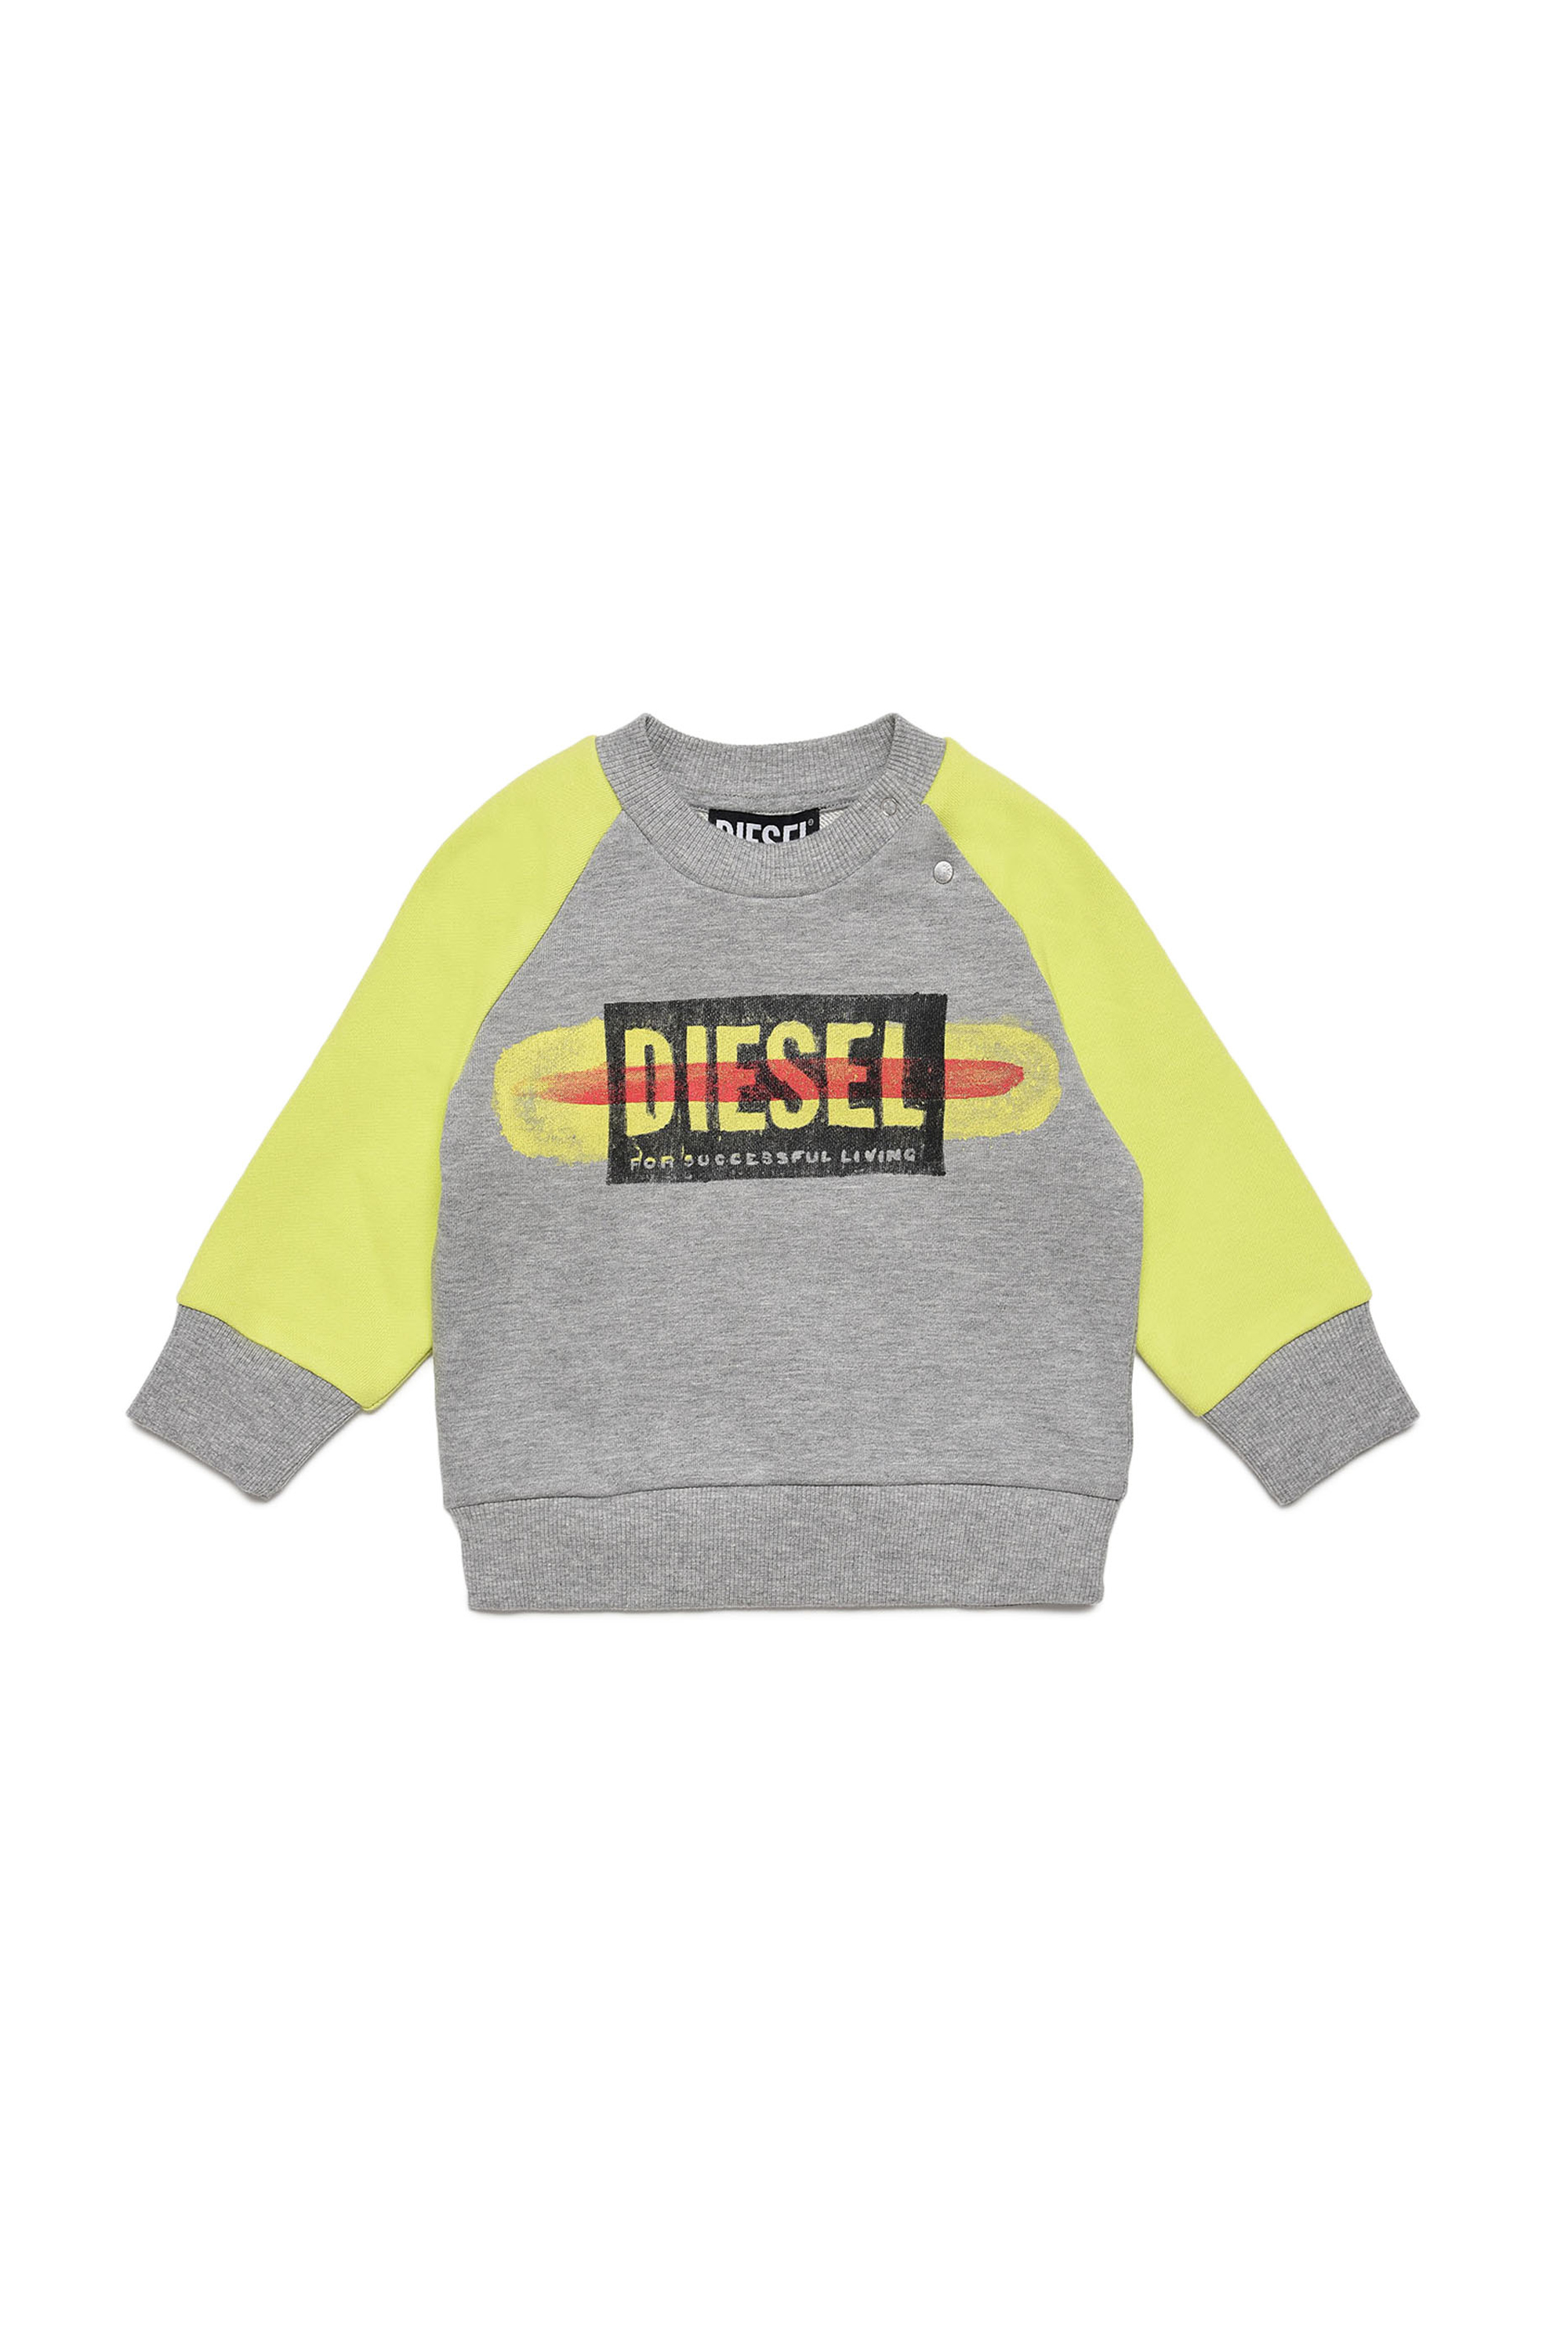 Diesel - STRACKYB, Grey/Yellow - Image 1